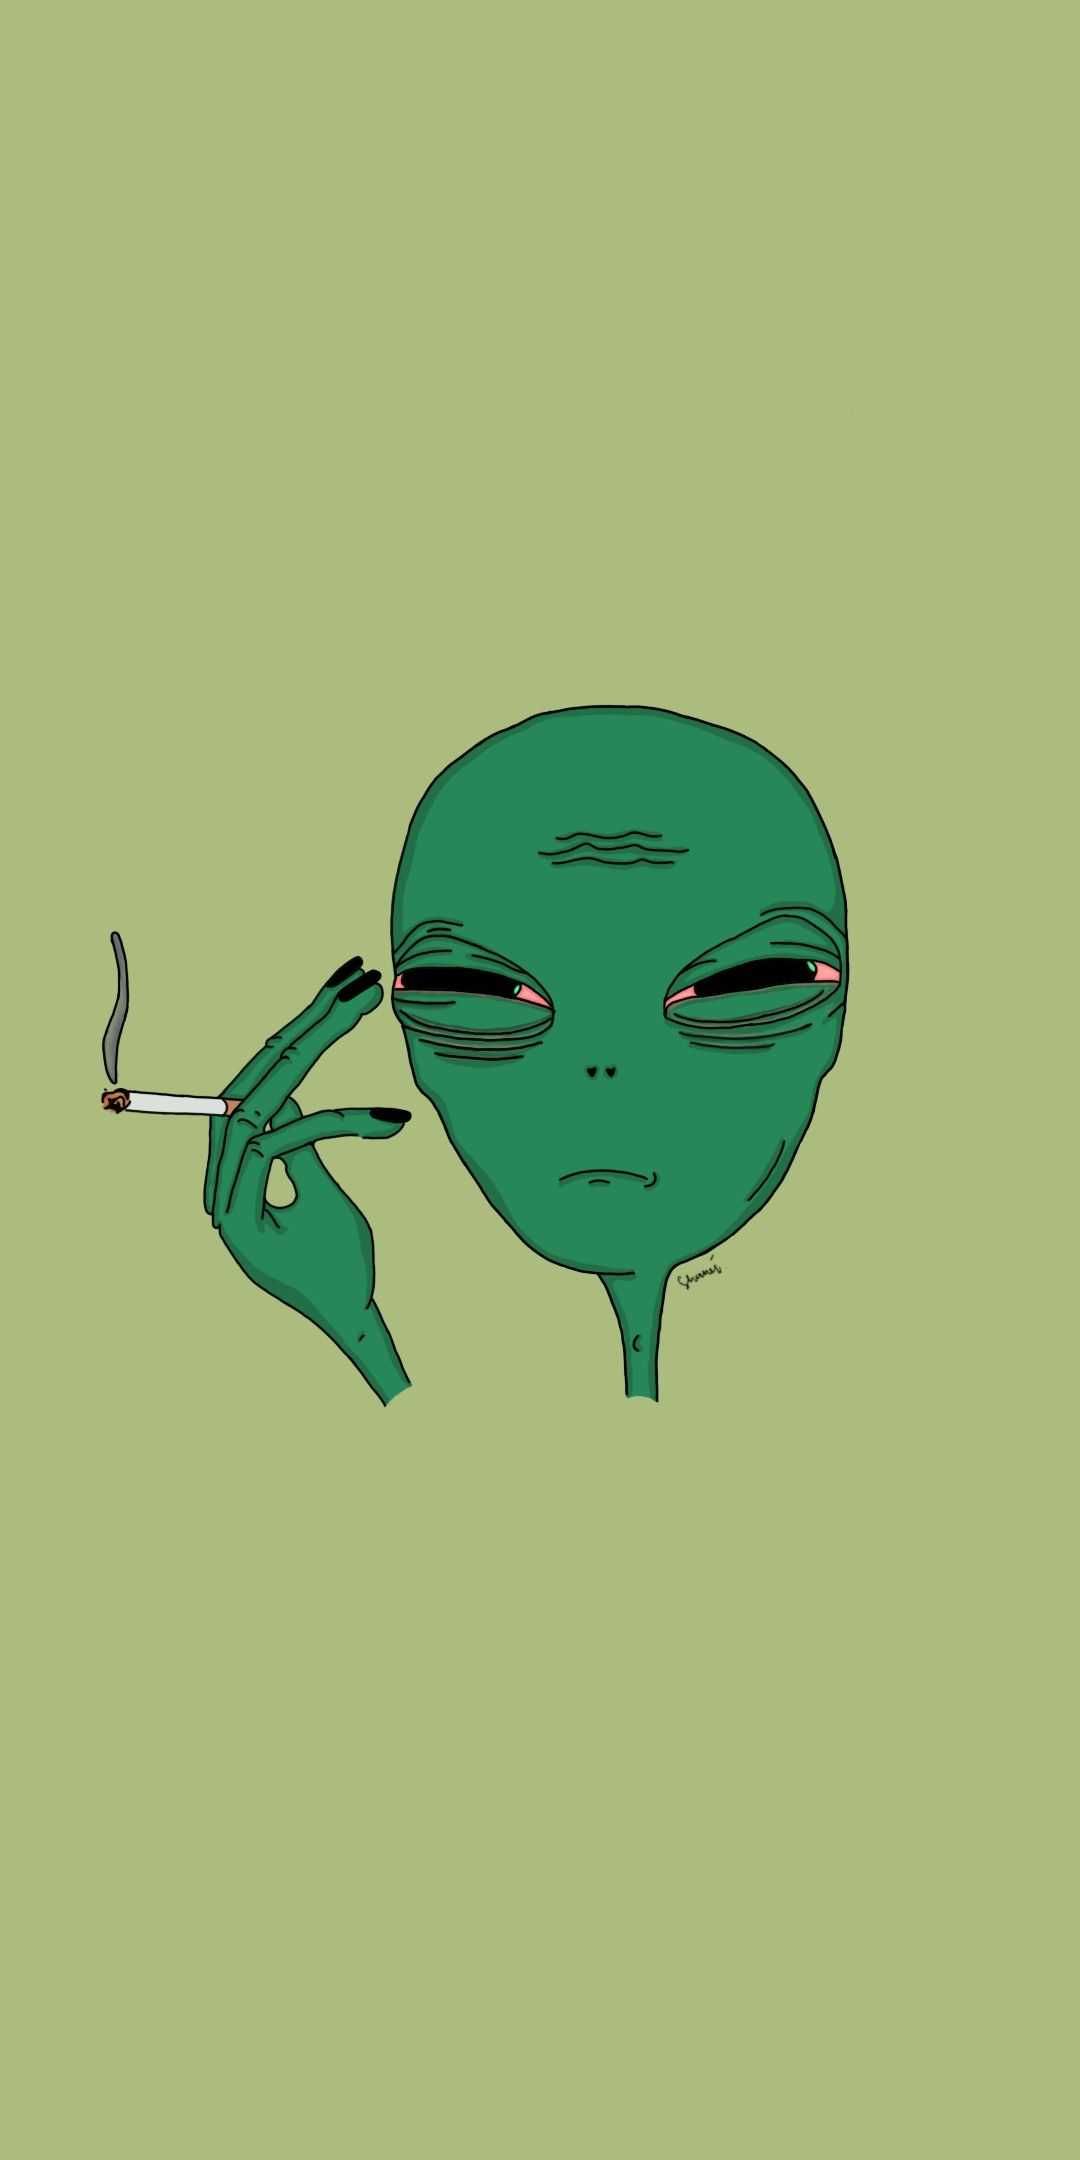 An alien smoking a cigarette on green background - Alien